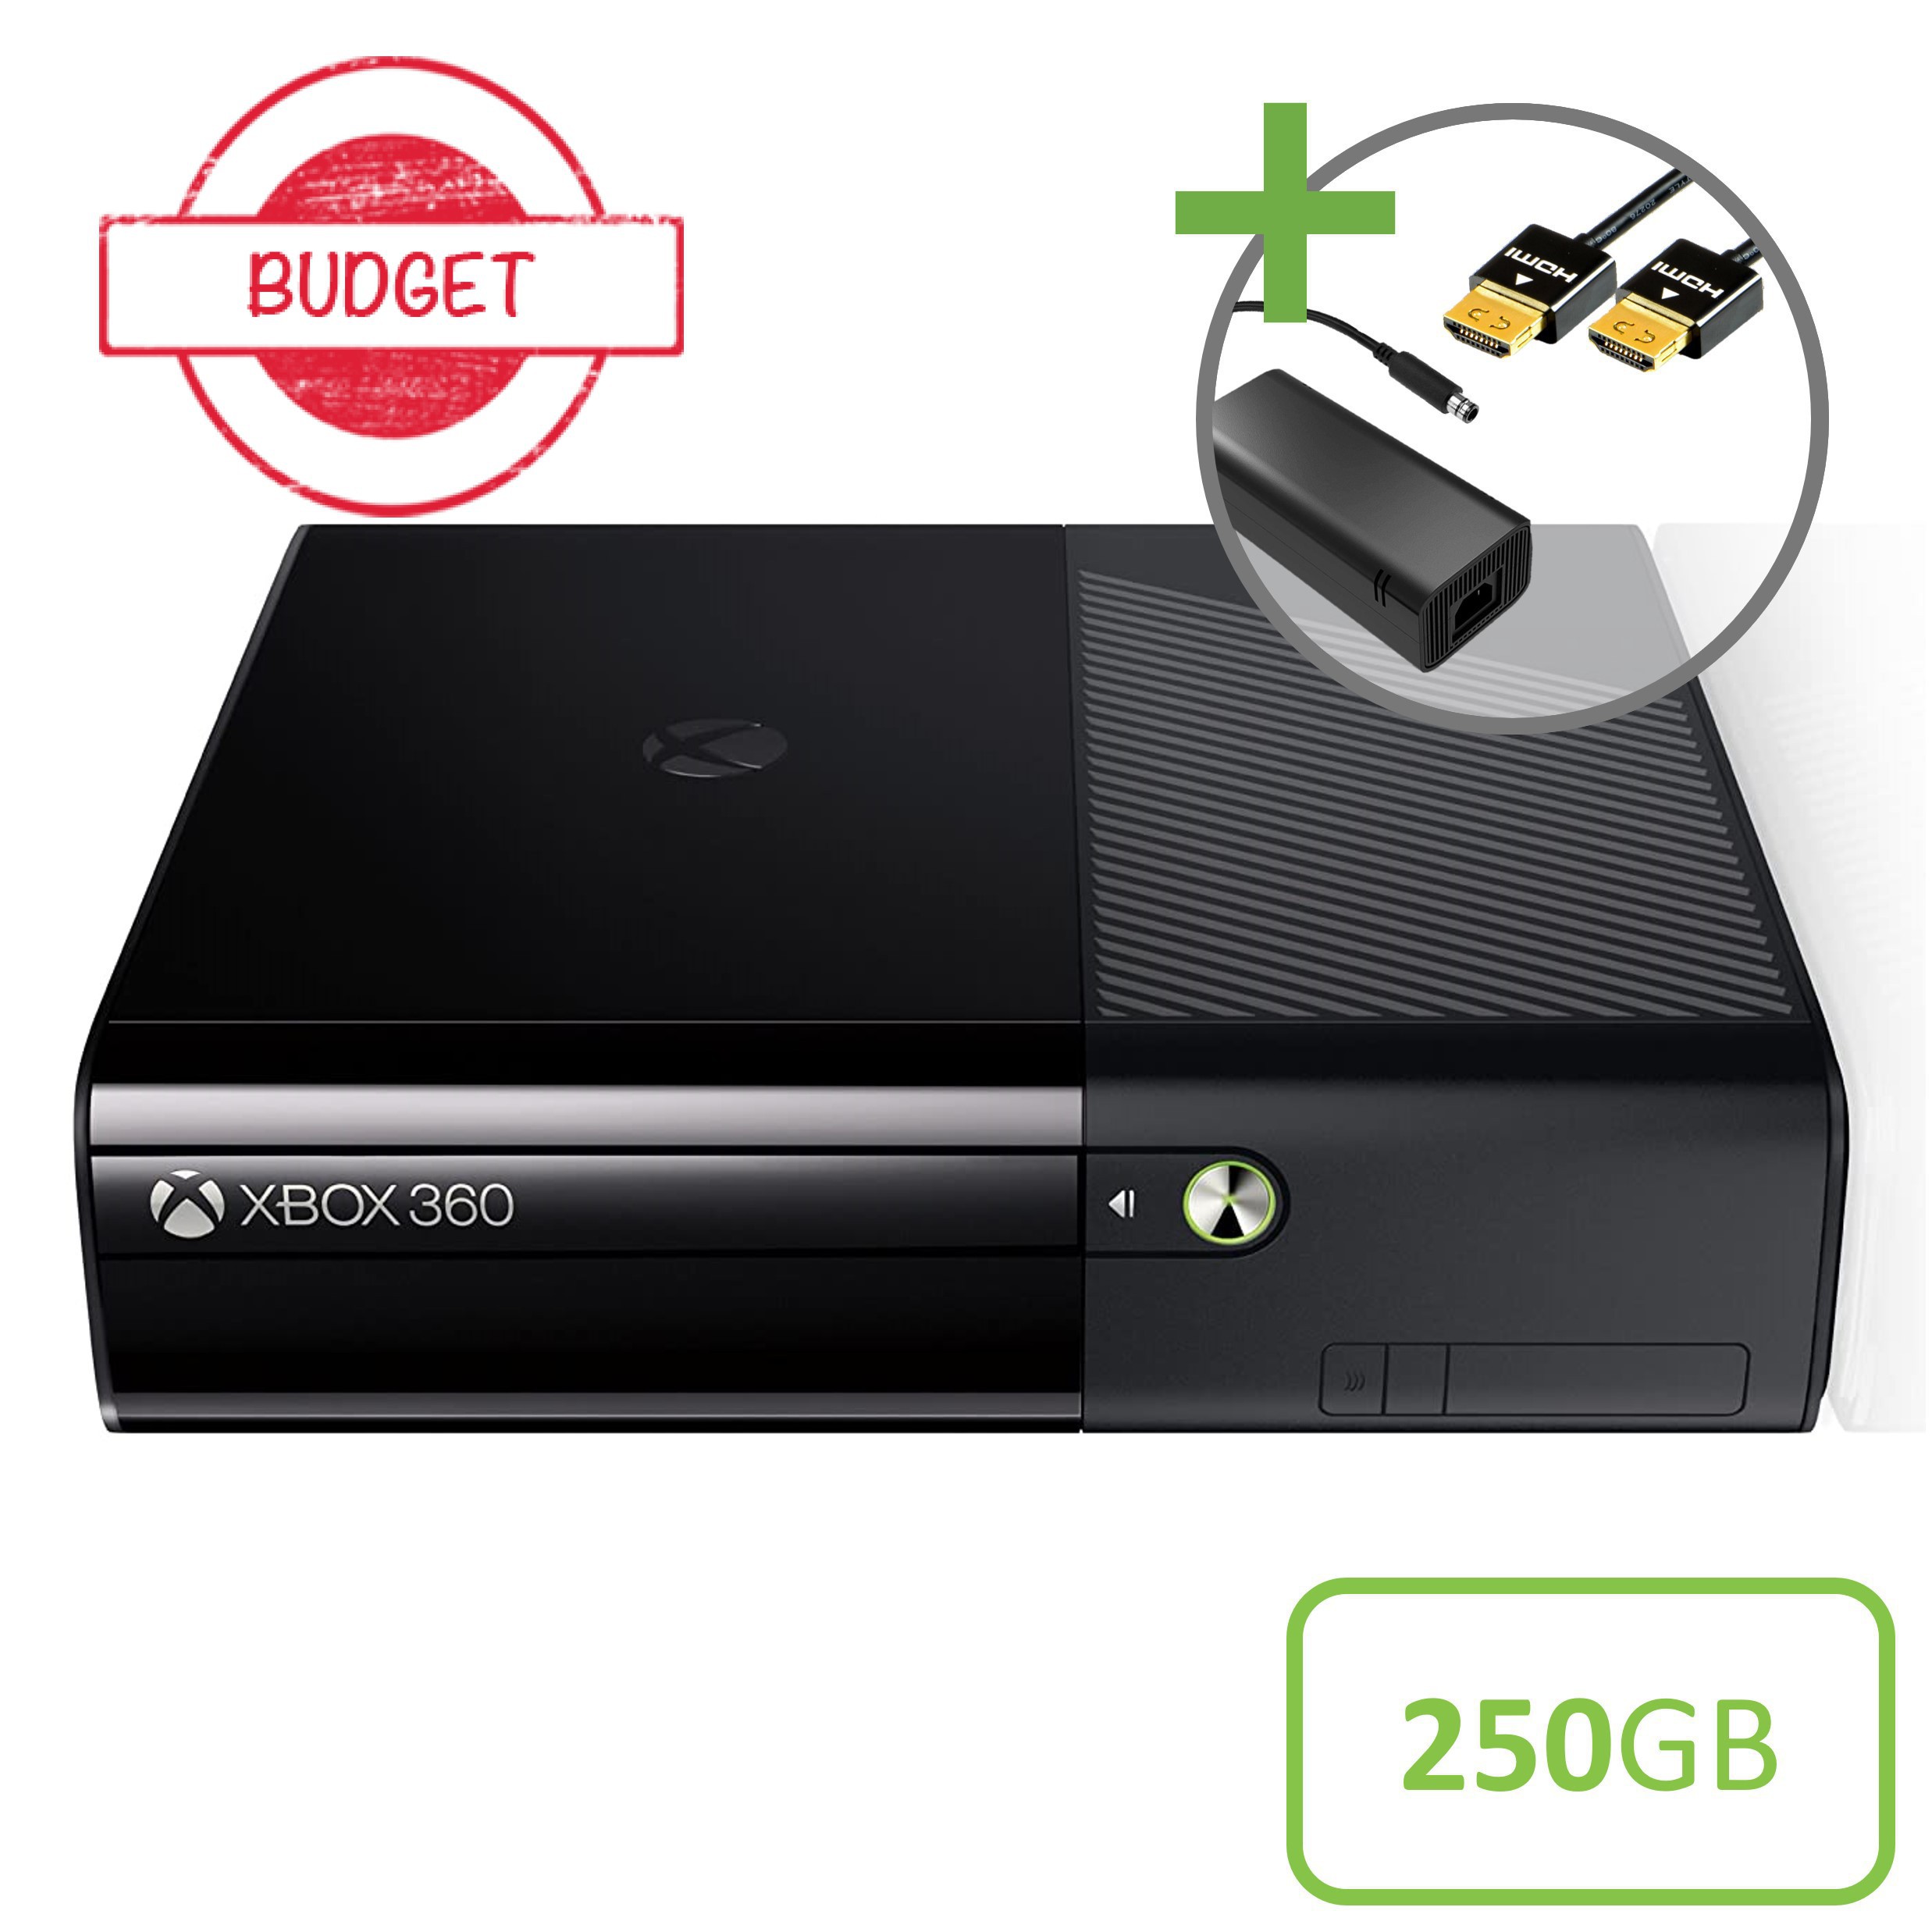 Microsoft Xbox 360 New Slim Console (250GB) - Budget - Xbox 360 Hardware - 2